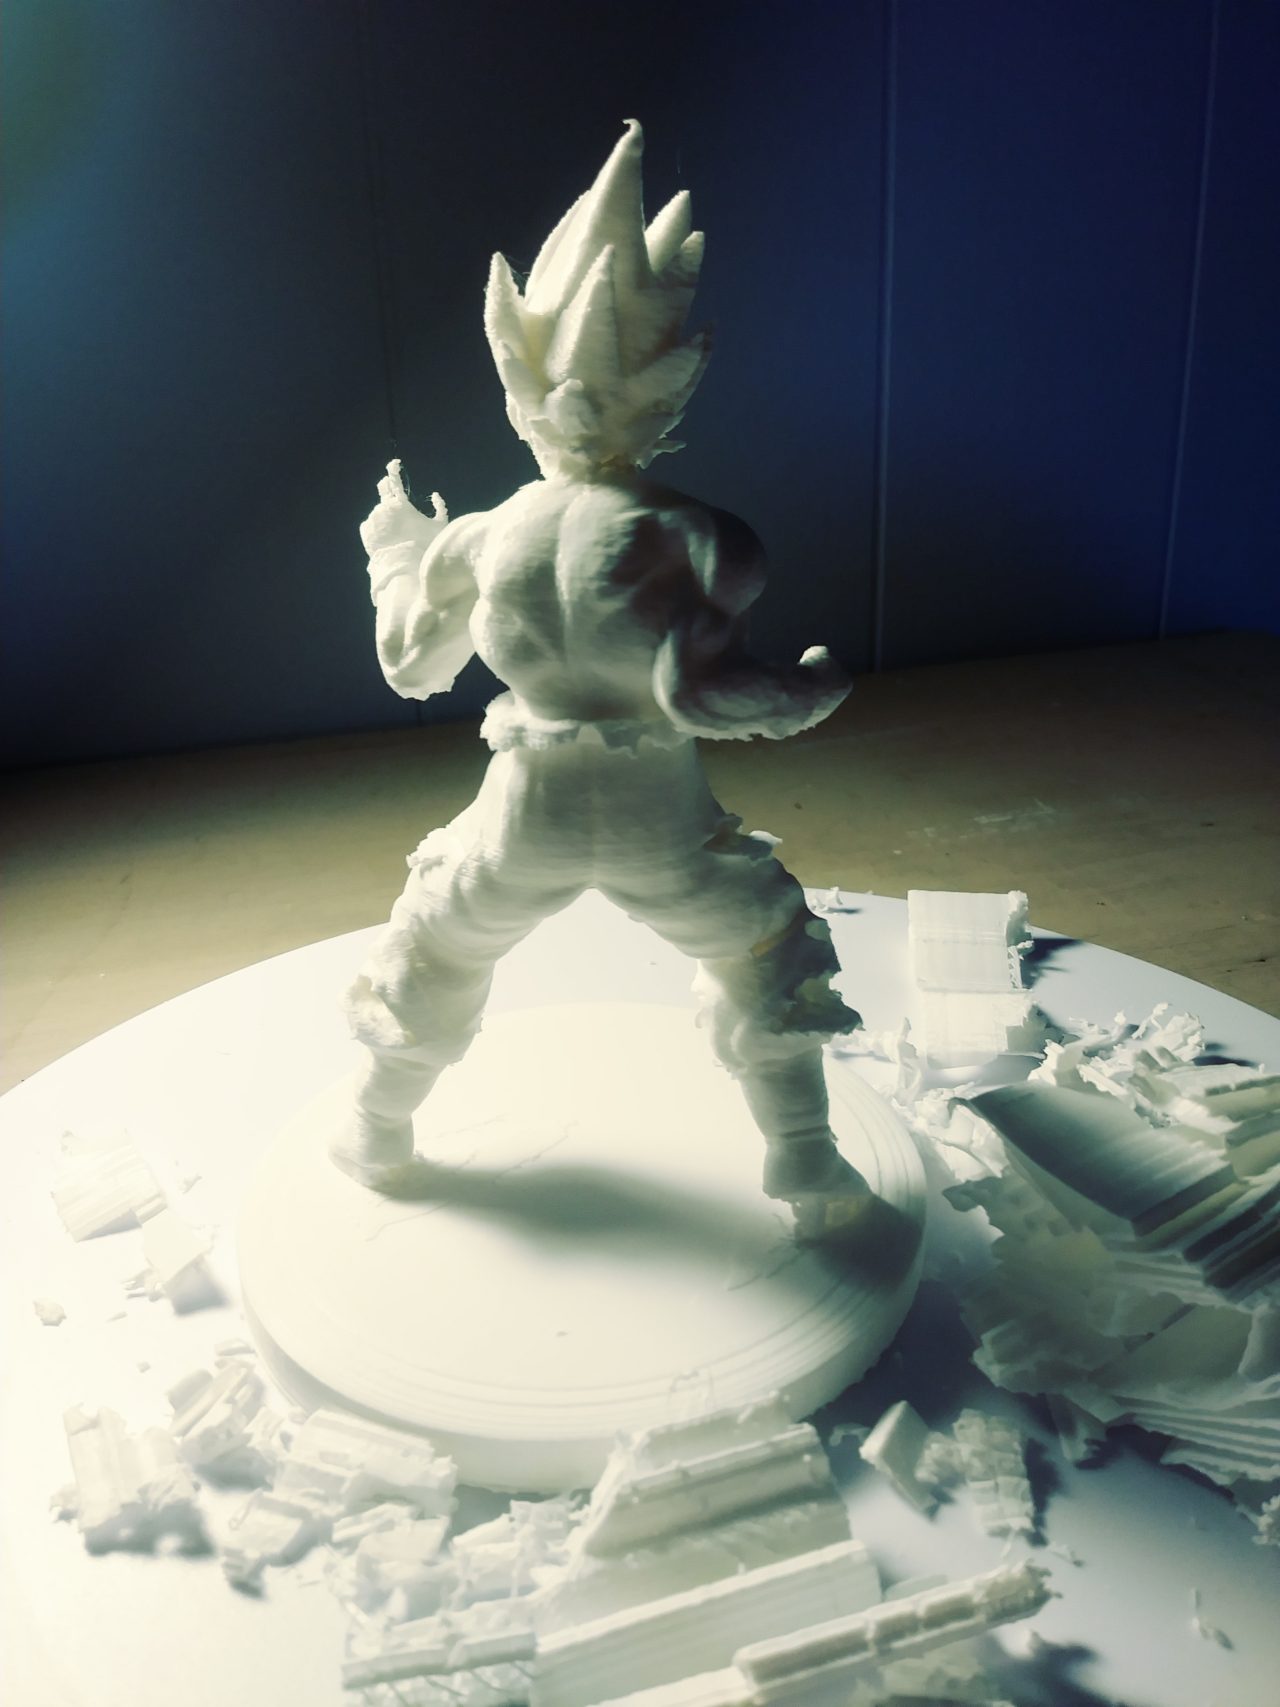 3D Print Your Own Anime Figures - 0229201432b Film3 1280x1707